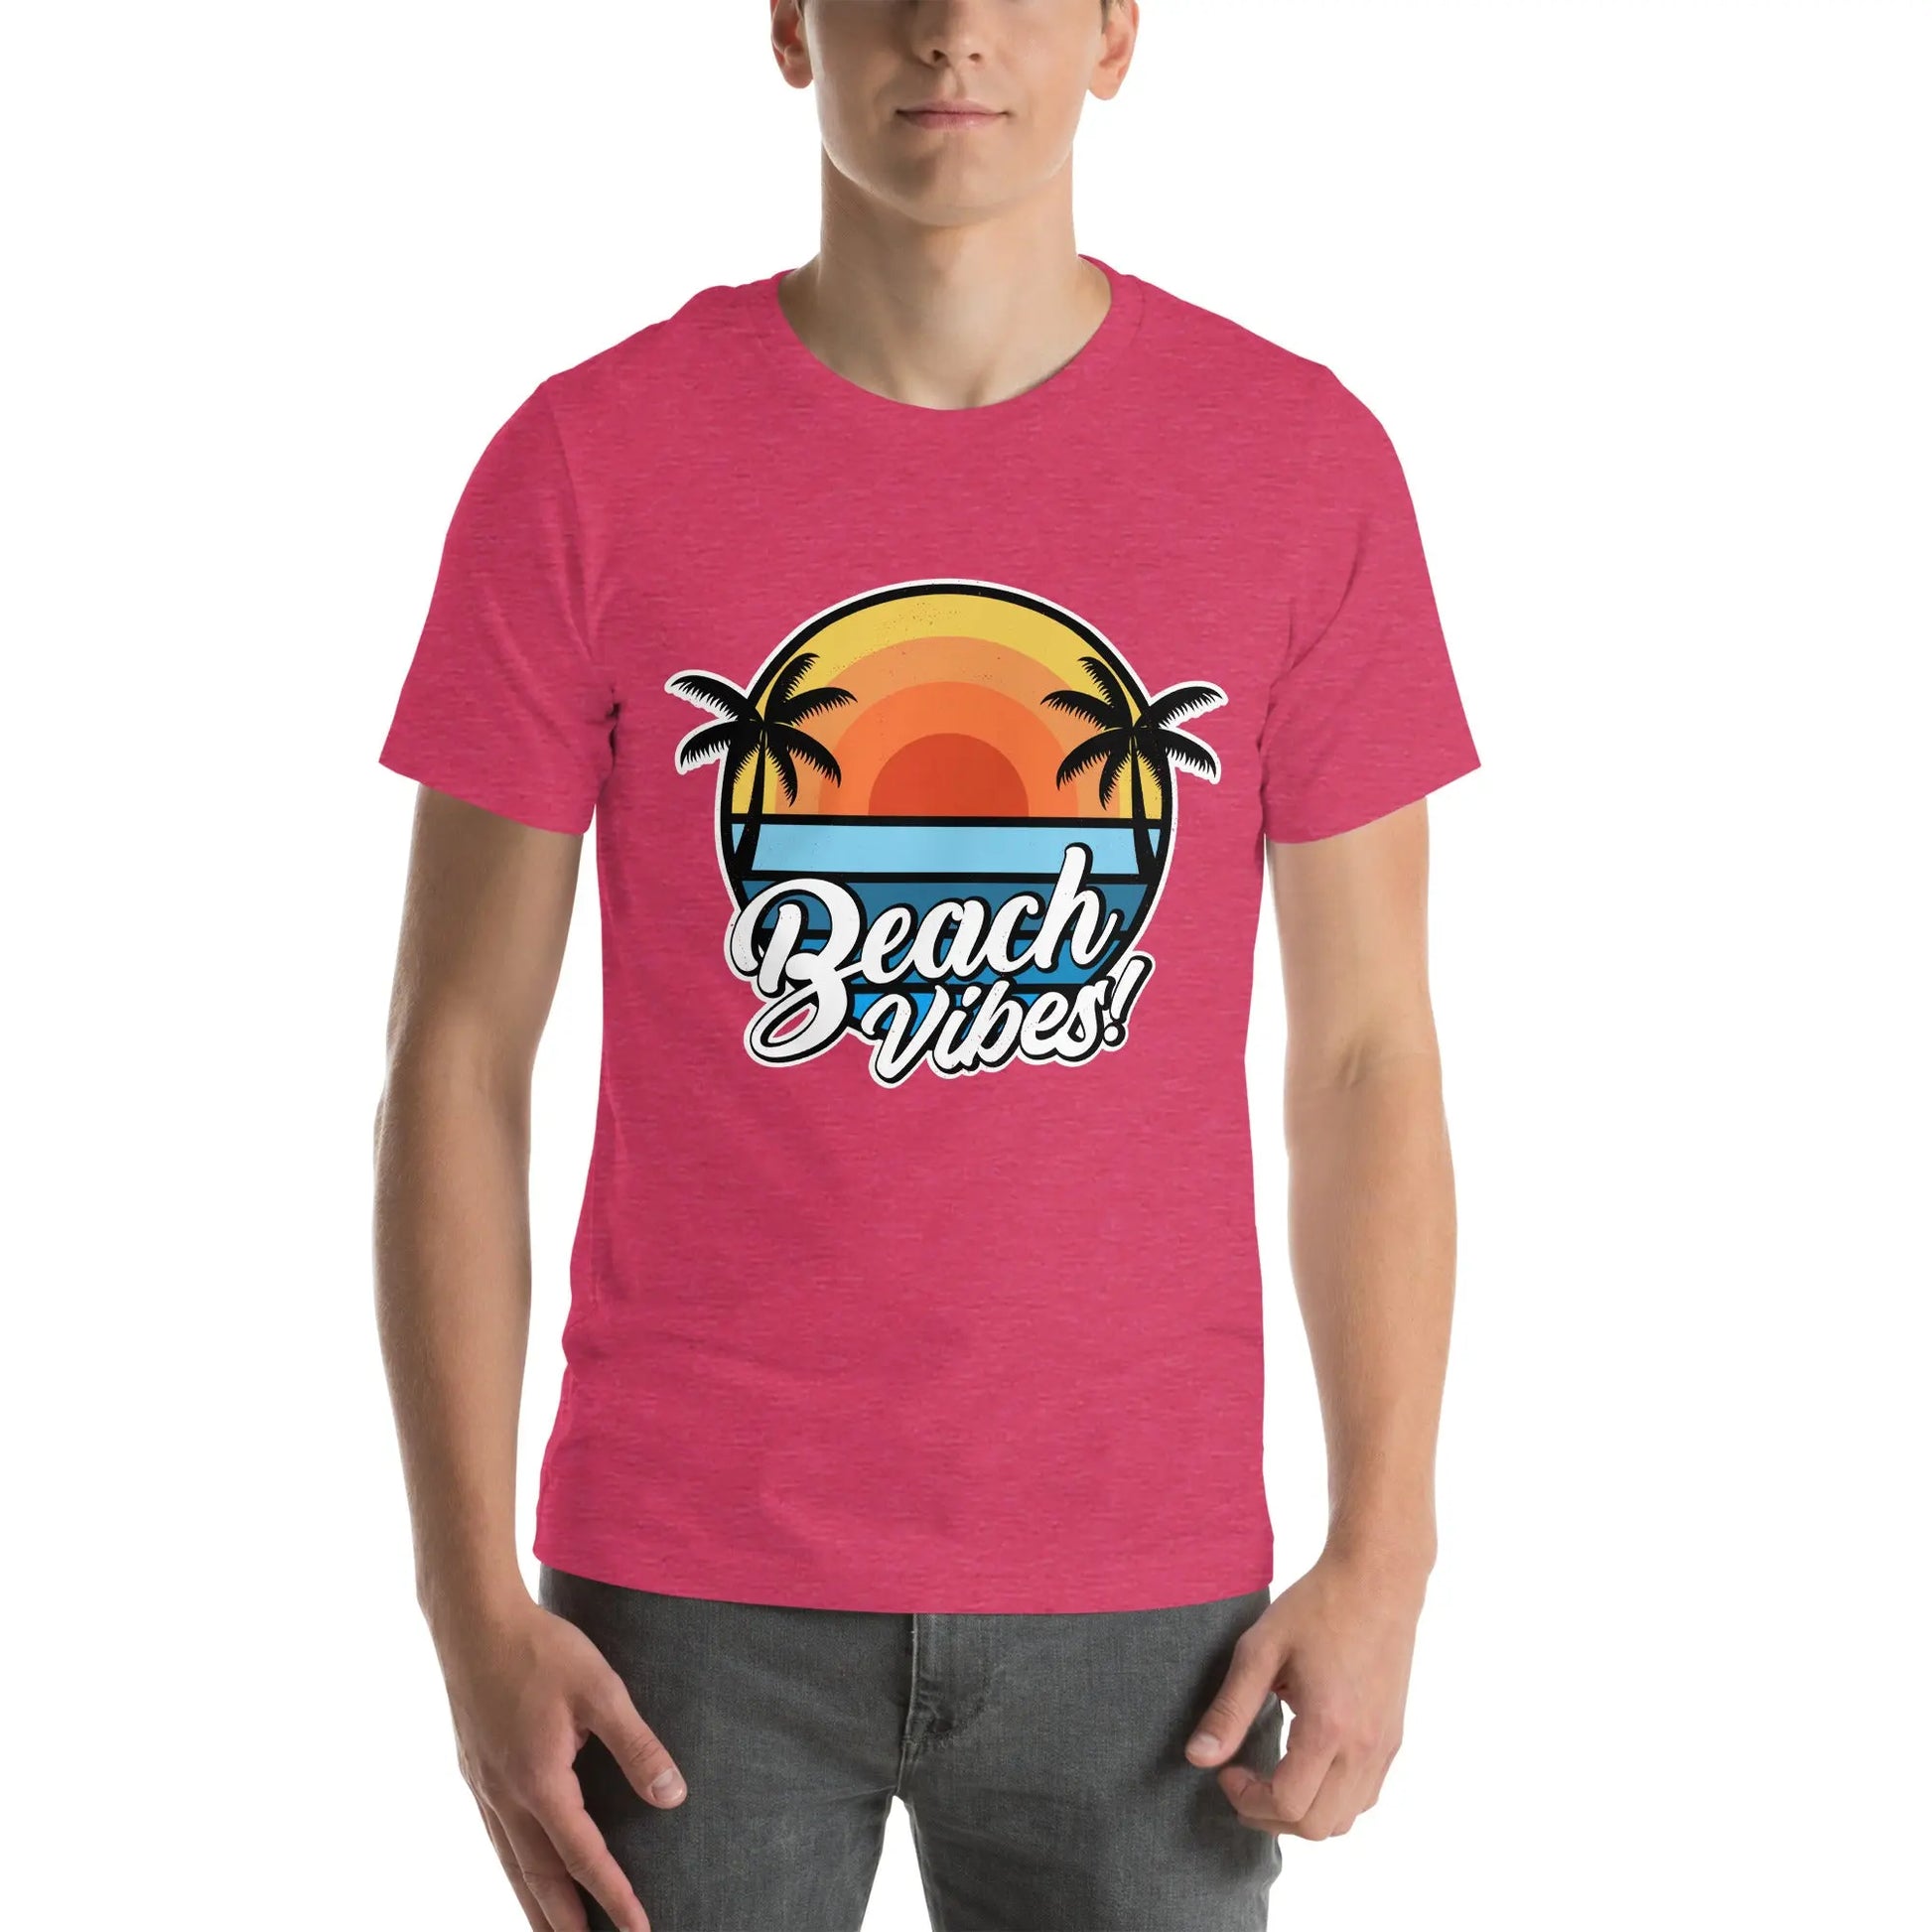 Beach Vibes with this Coastal Adult Unisex T-Shirt - Coastal Journeyz9496443_8523